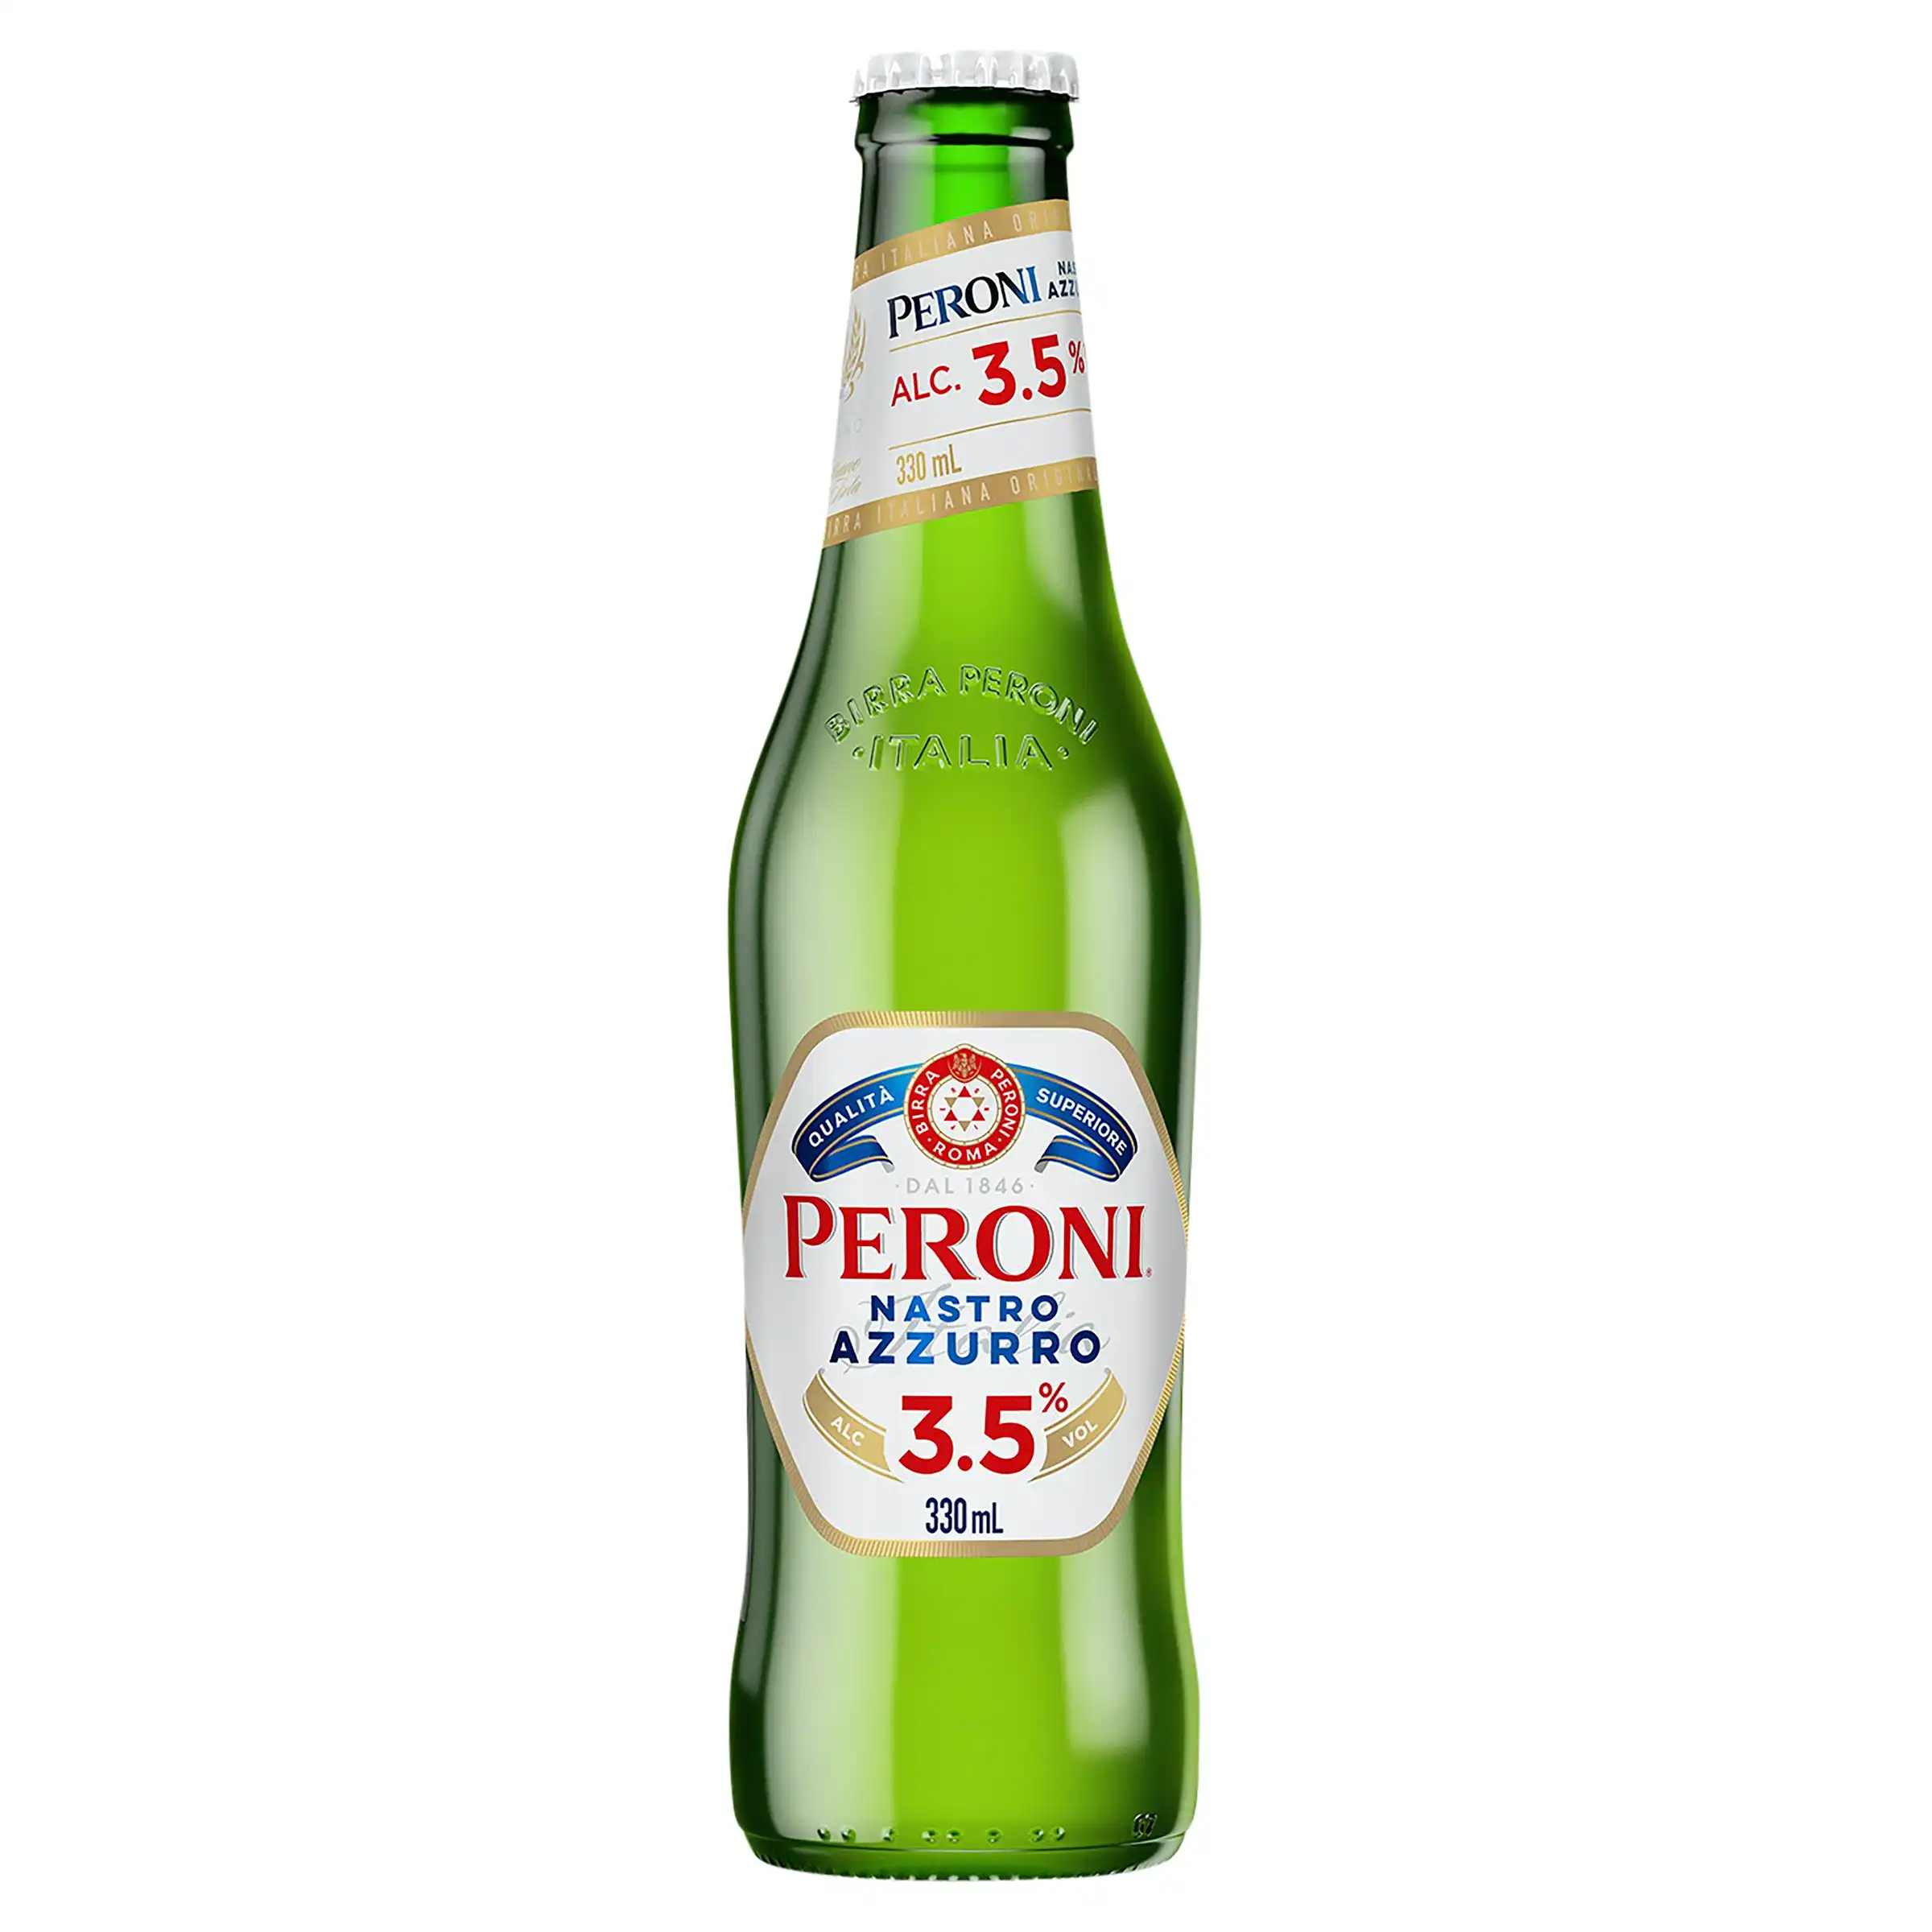 Peroni Nastro Azzurro 3.5% Beer Case 24 x 330mL Bottles